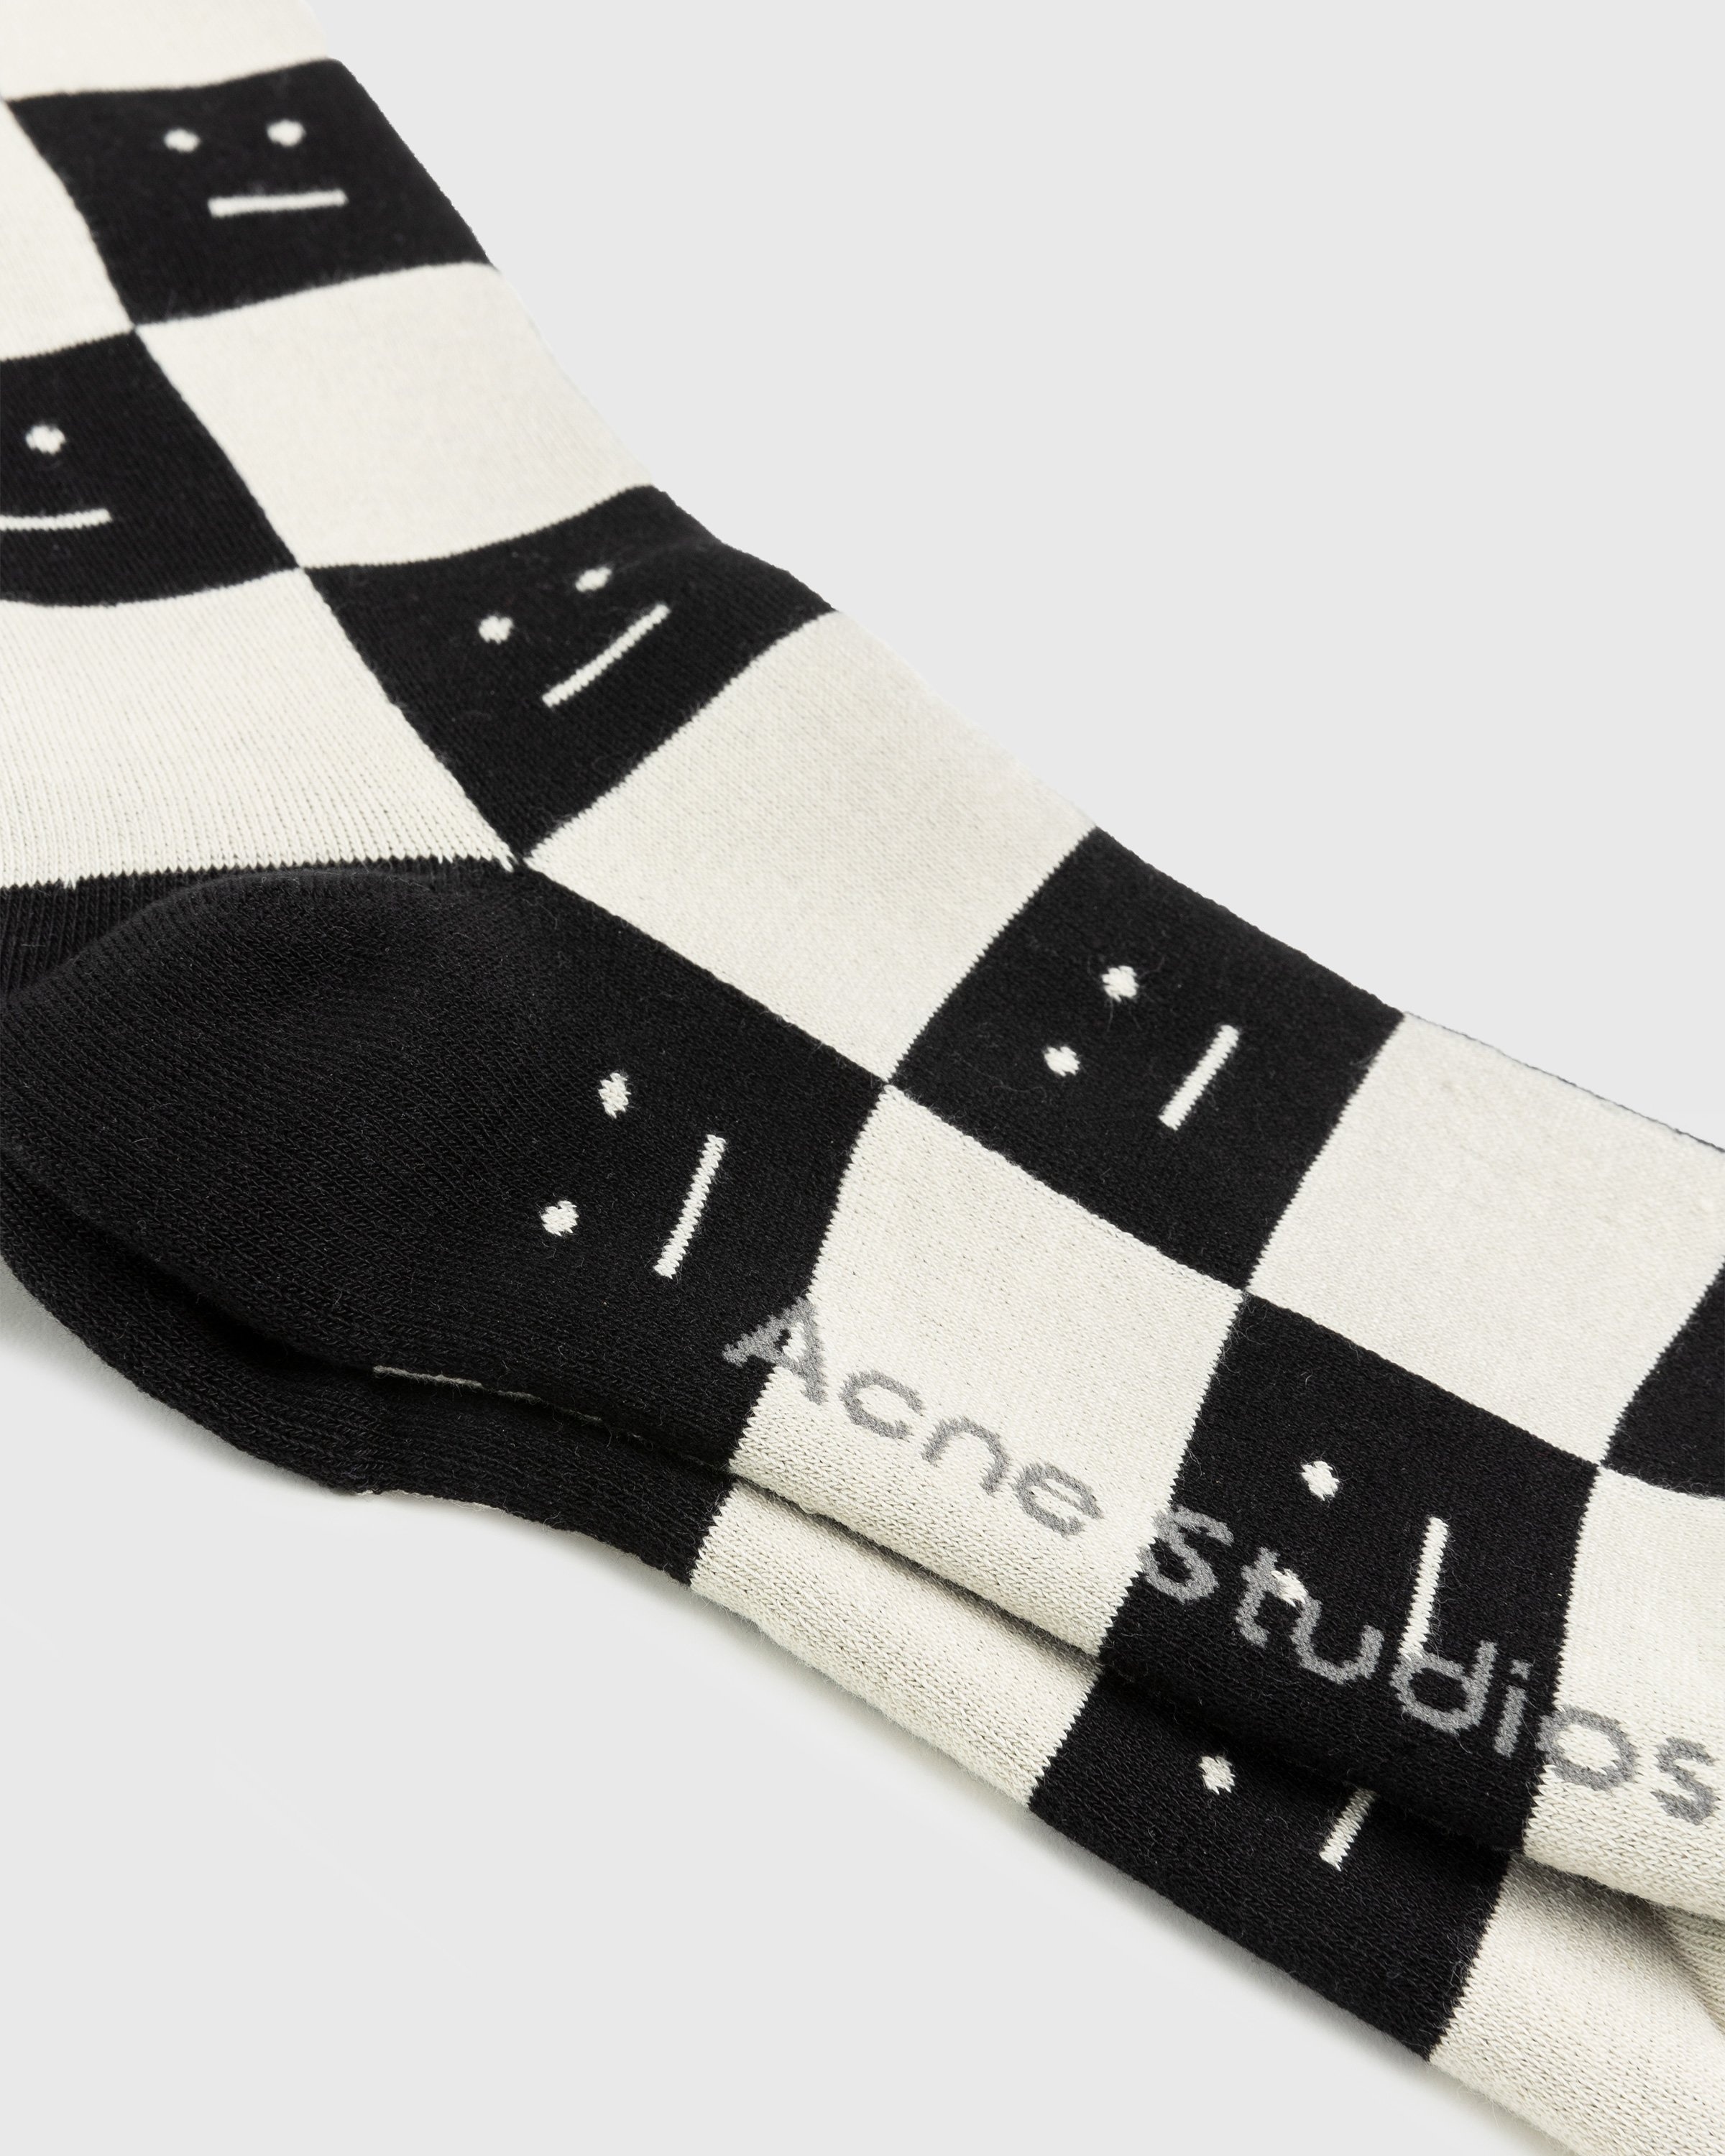 Acne Studios – Checkerboard Socks Black/Oatmeal Beige - Crew - Black - Image 3